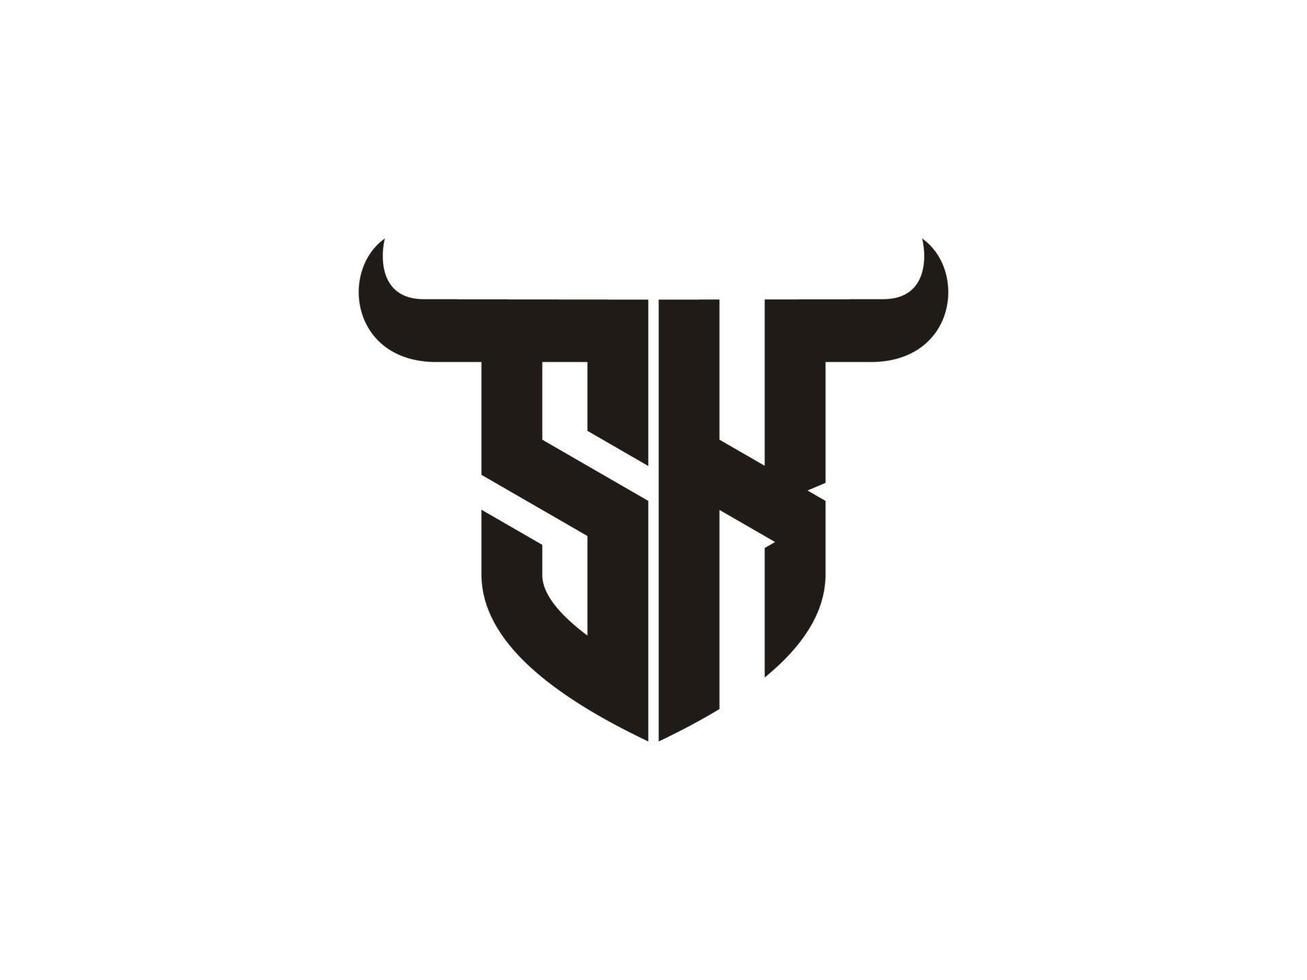 anfängliches sk-bull-logo-design. vektor